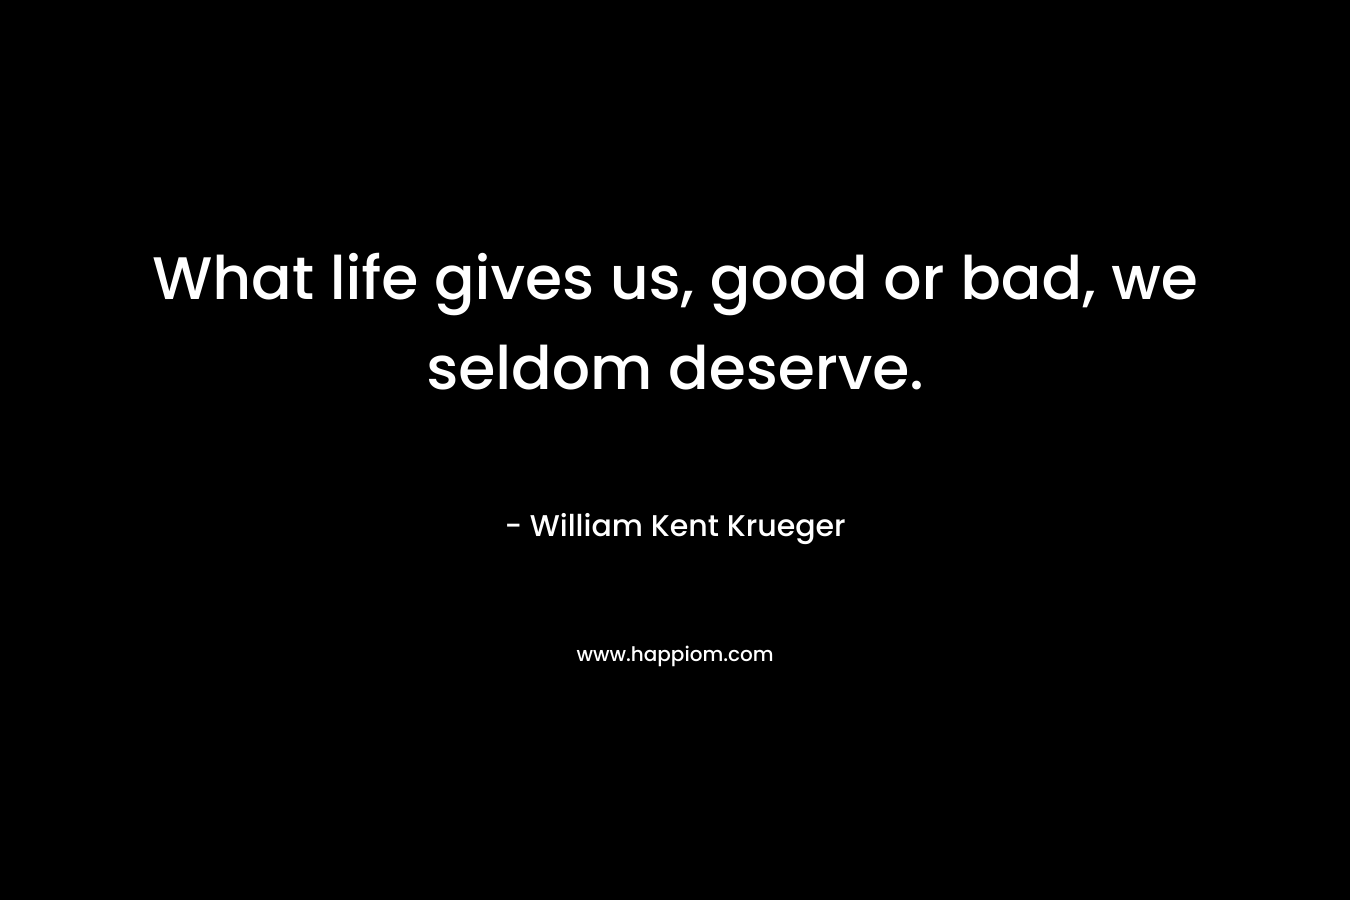 What life gives us, good or bad, we seldom deserve.